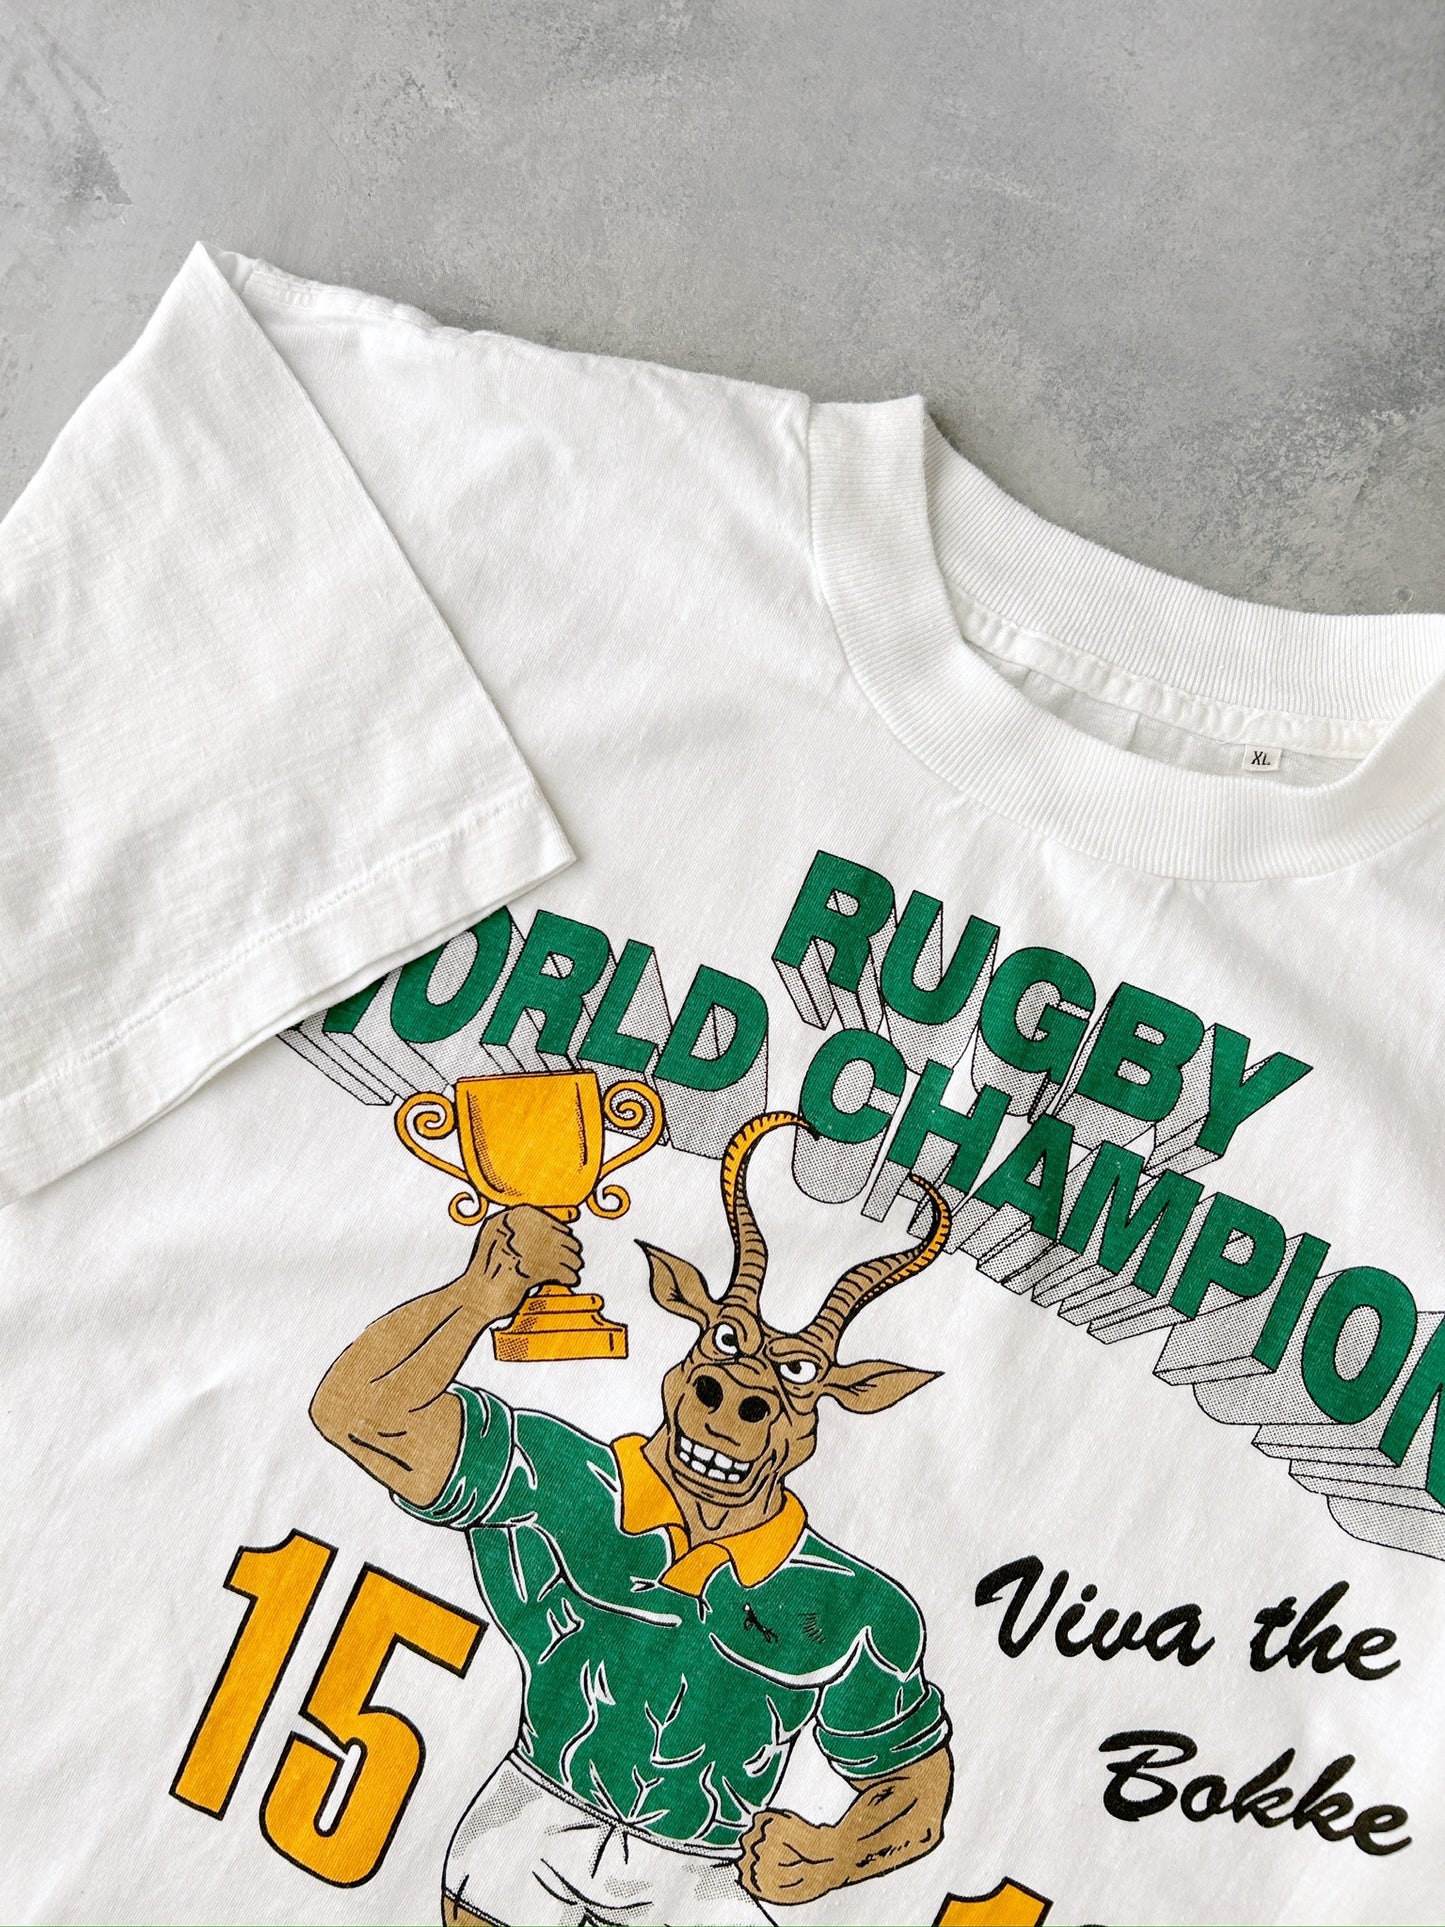 Rugby World Champions T-Shirt '95 - XL